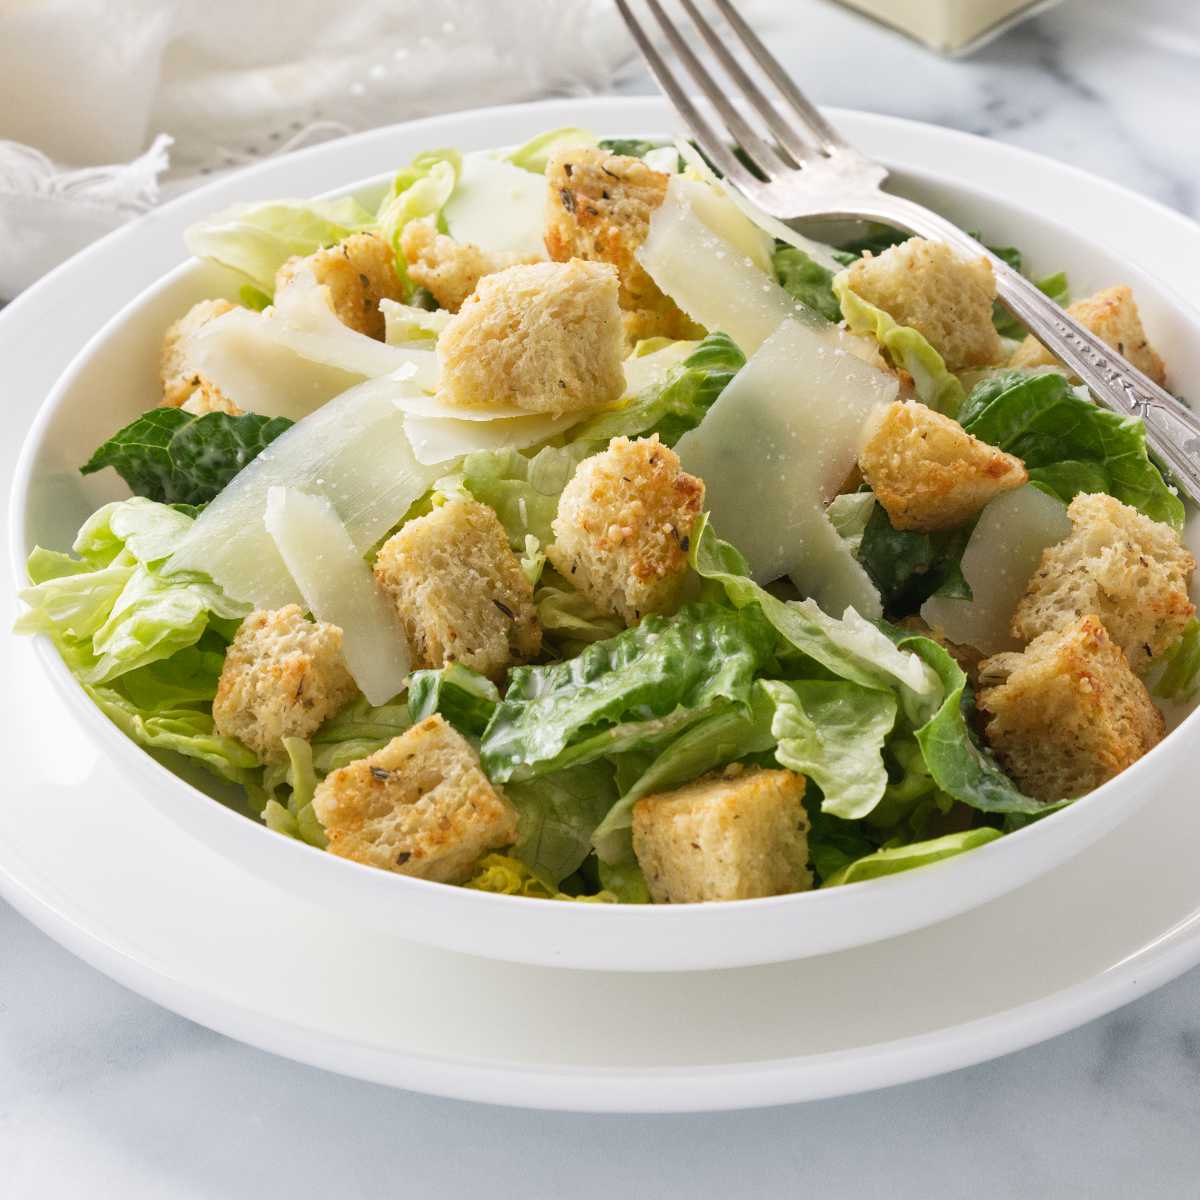 Croutons on a Caesar salad.